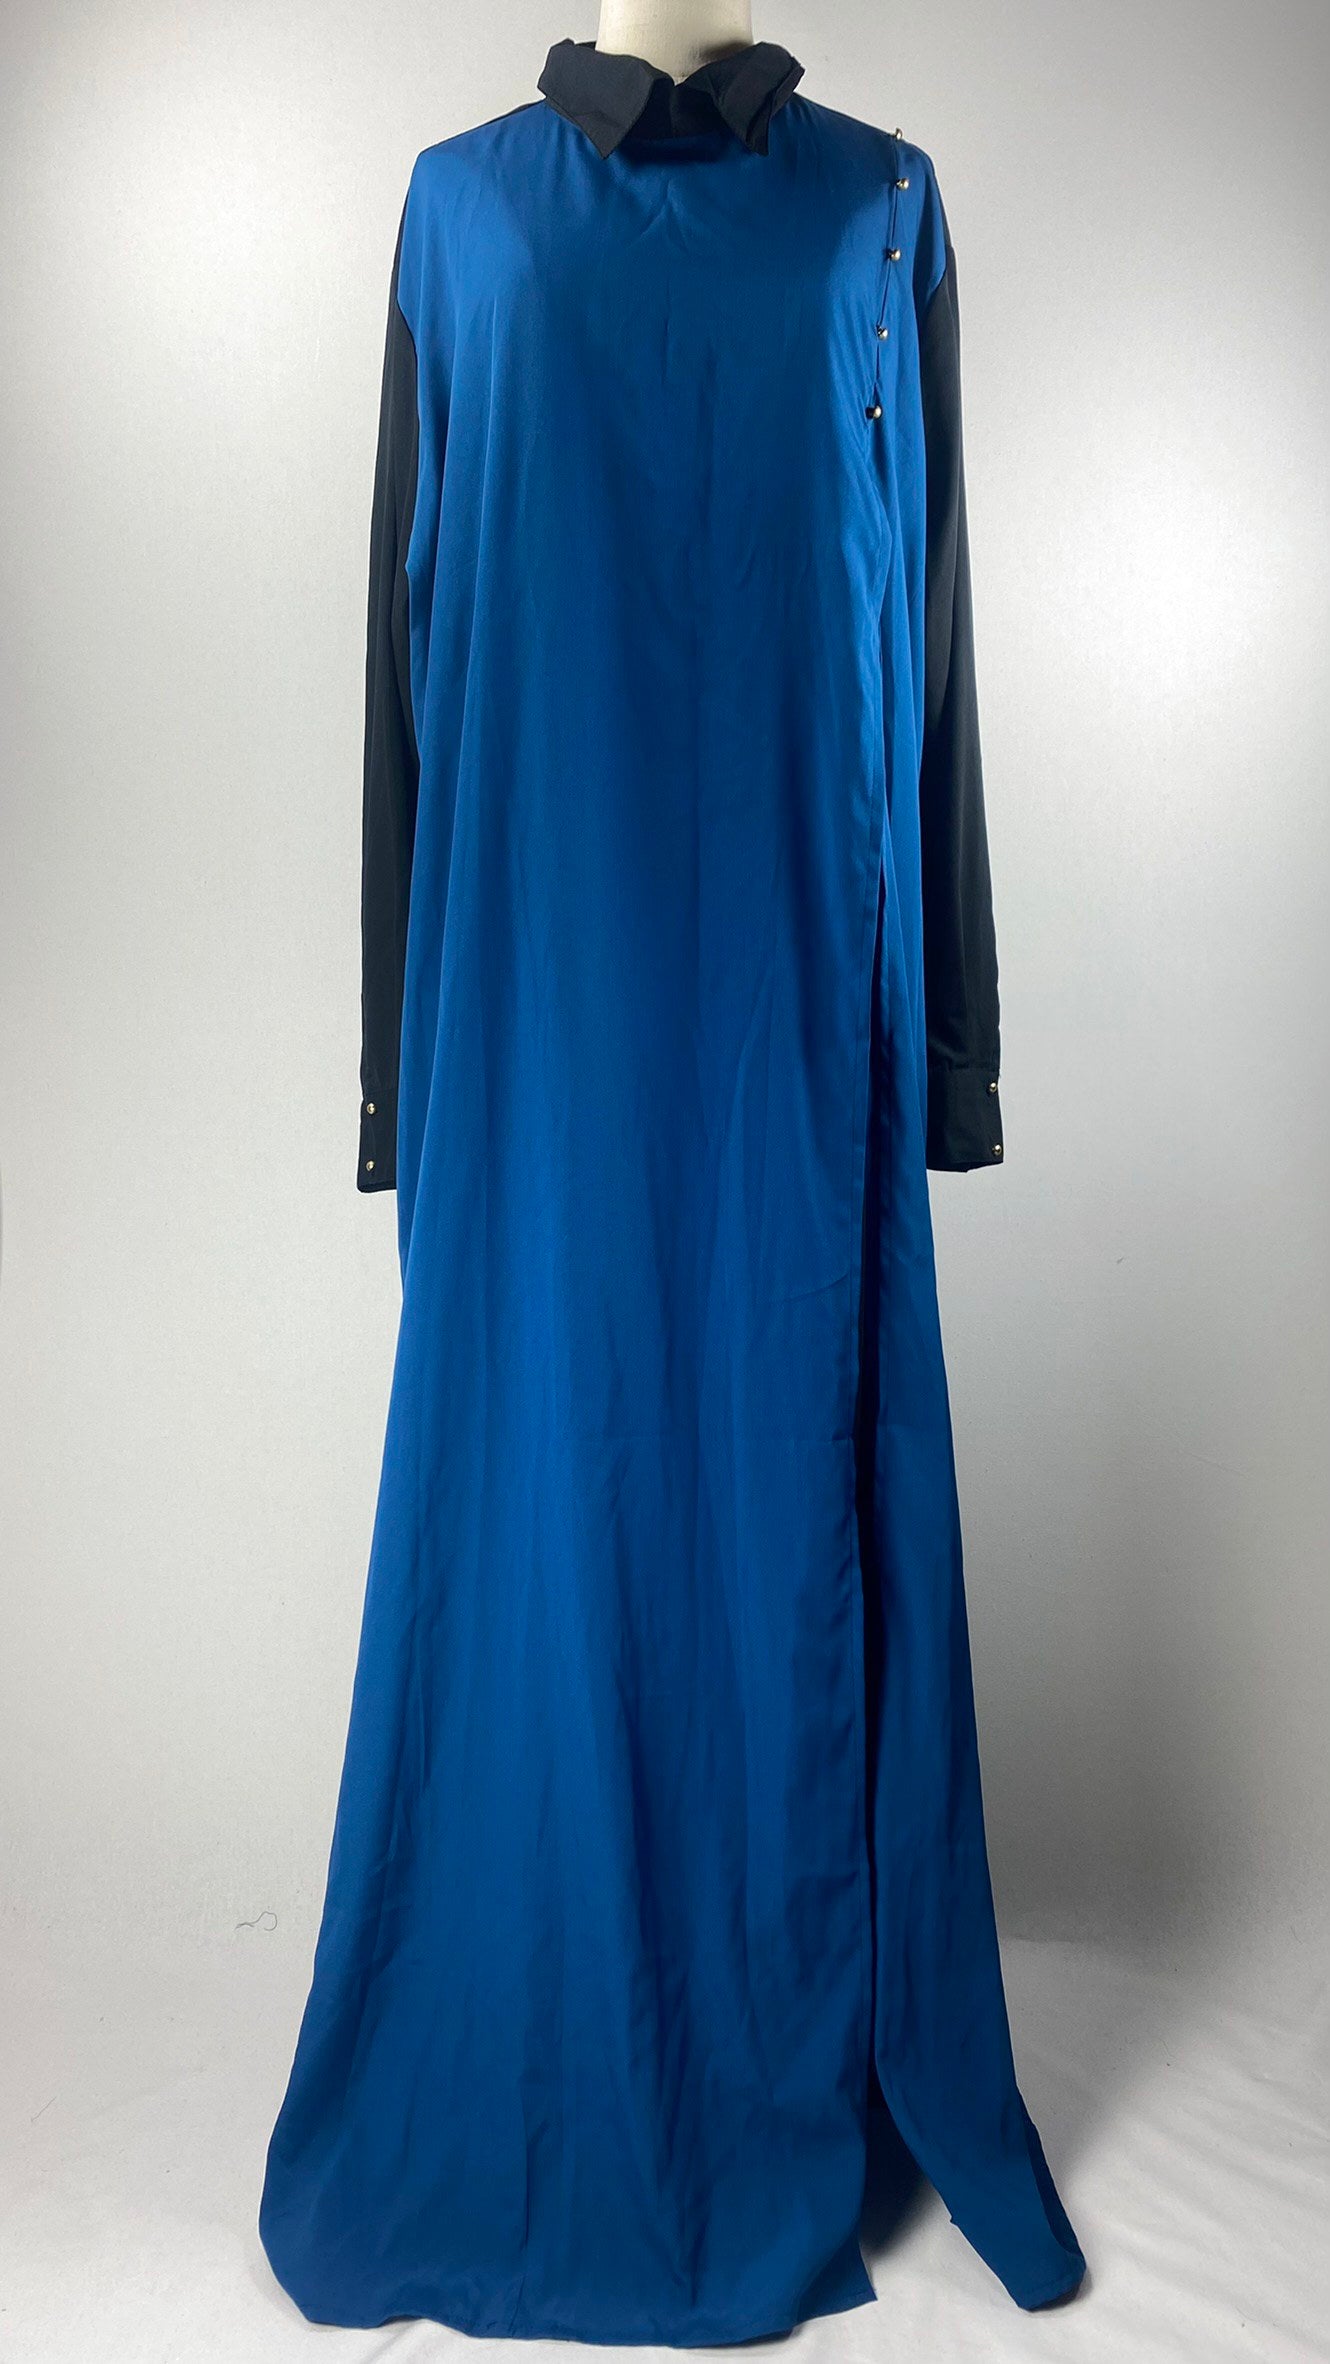 Long Sleeve Closed Abaya Dress, Blue/Black